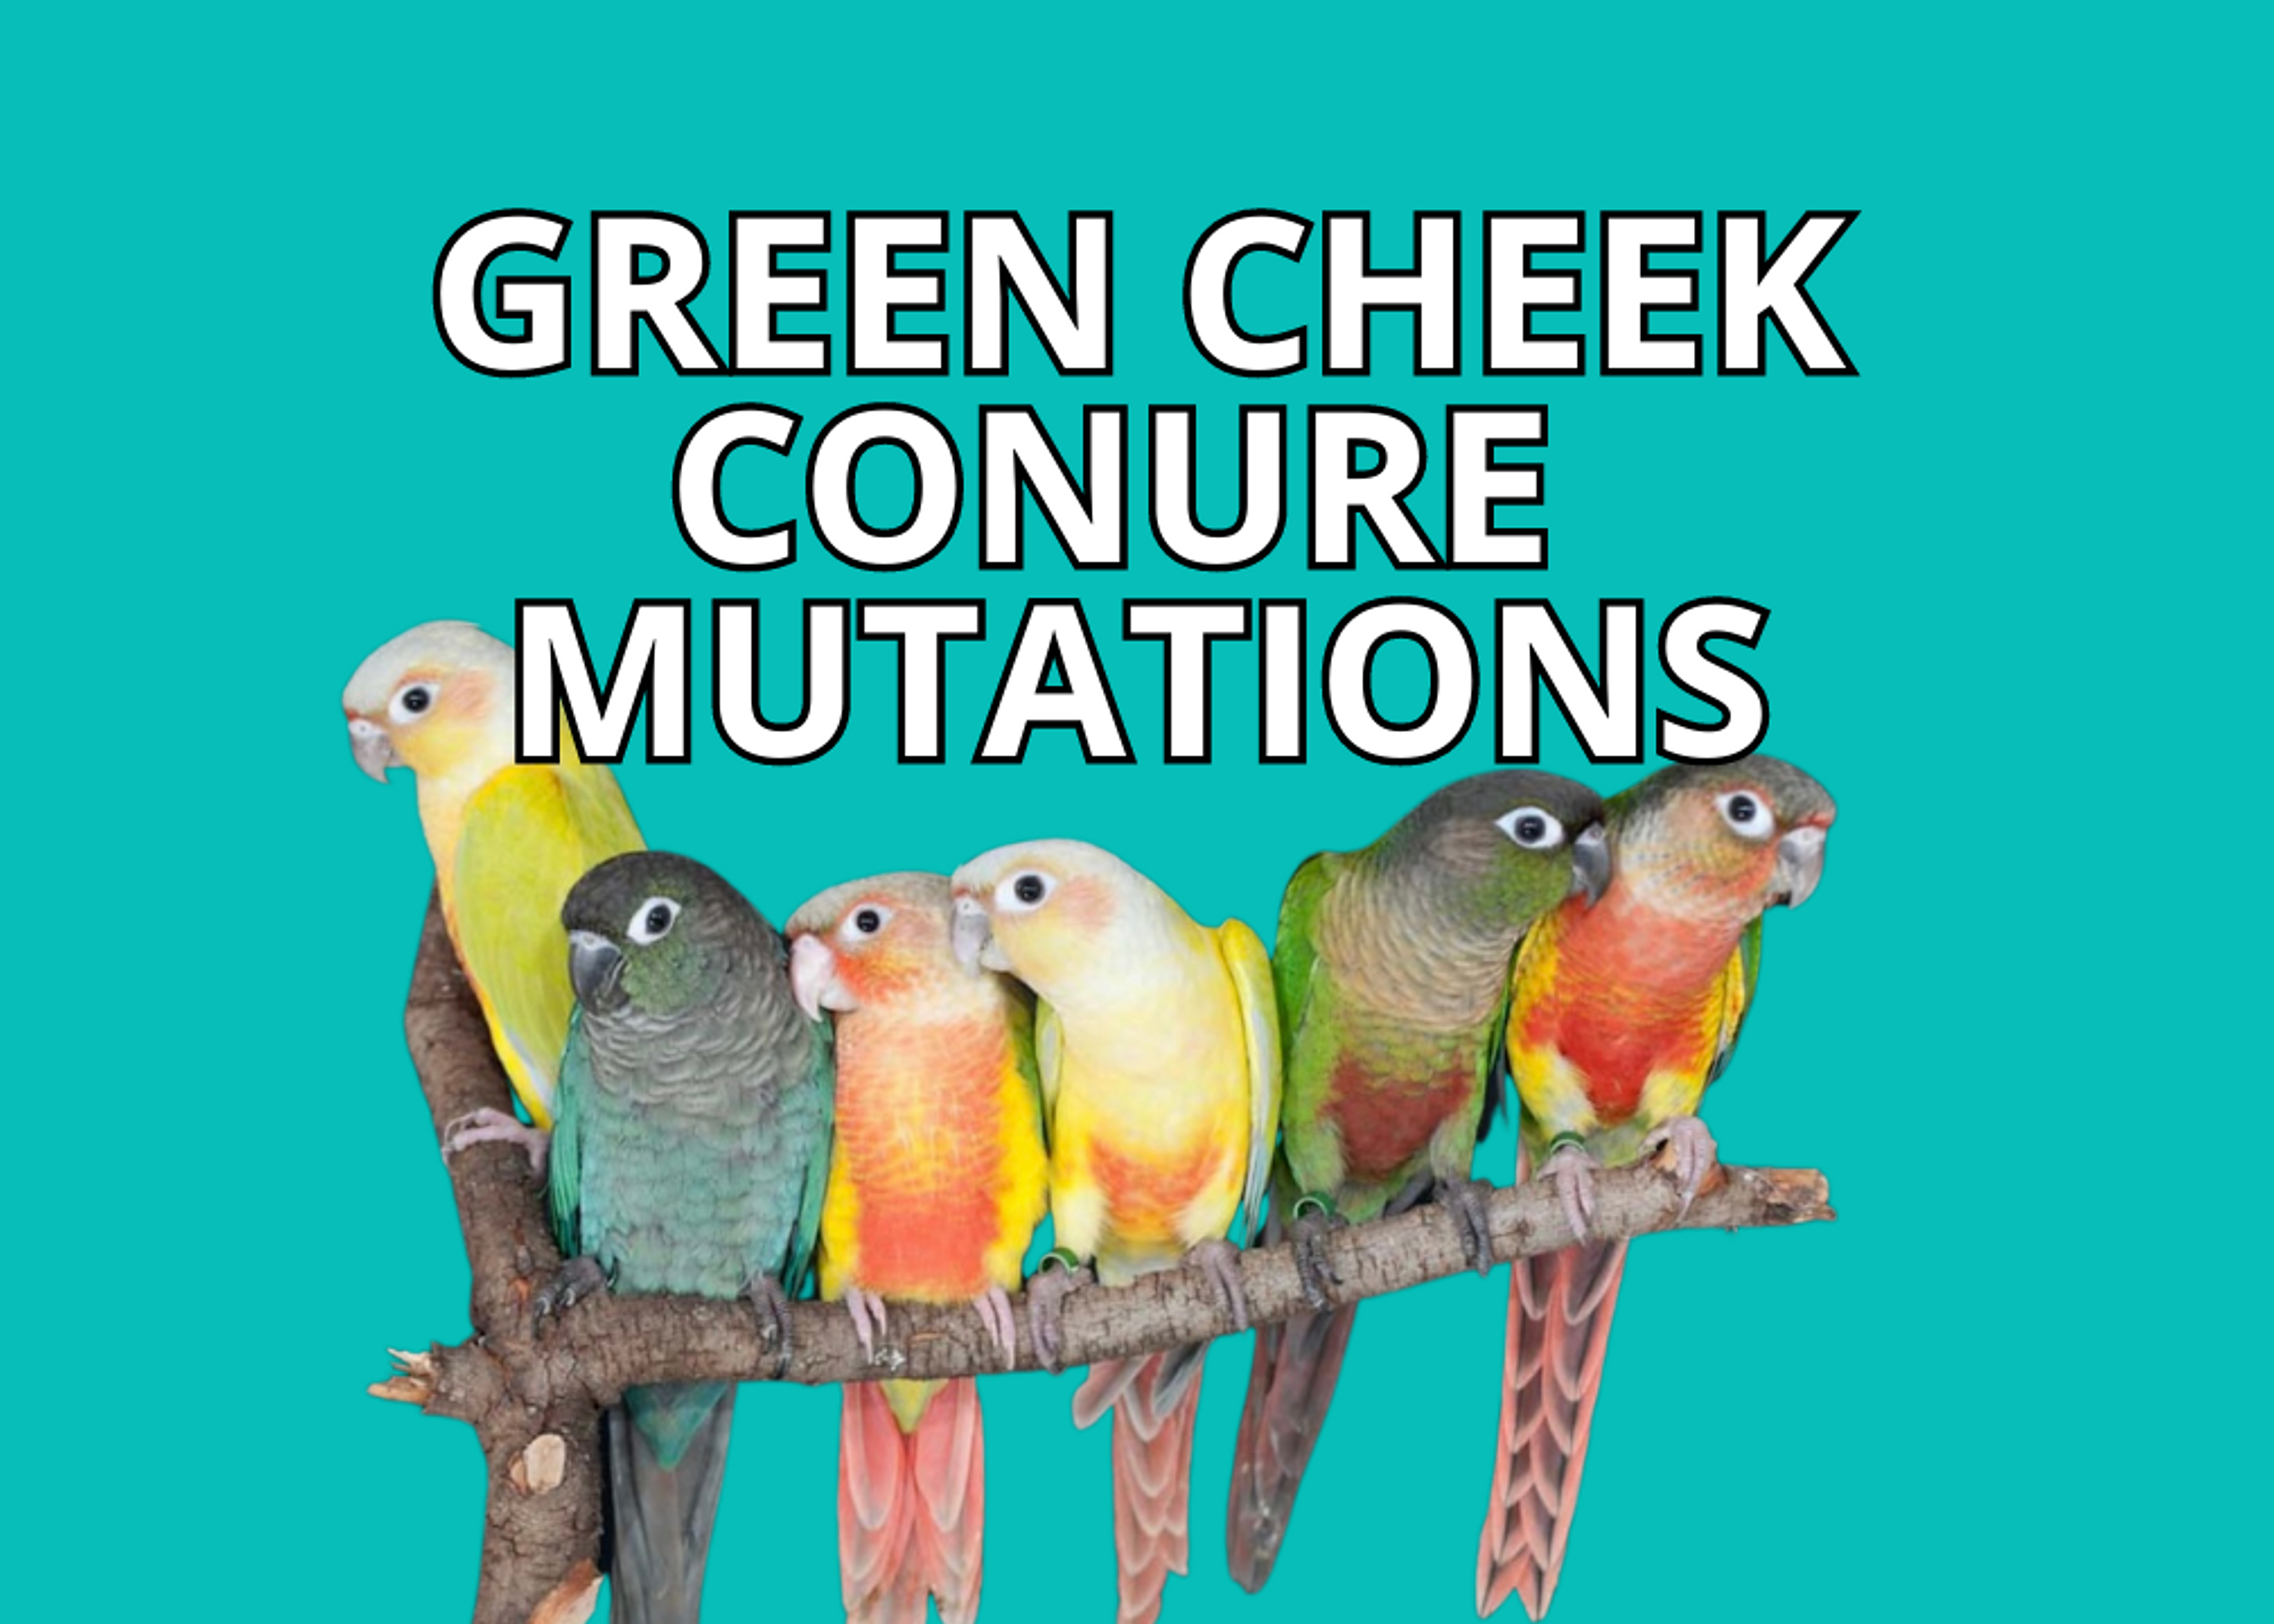 parakeet color variations